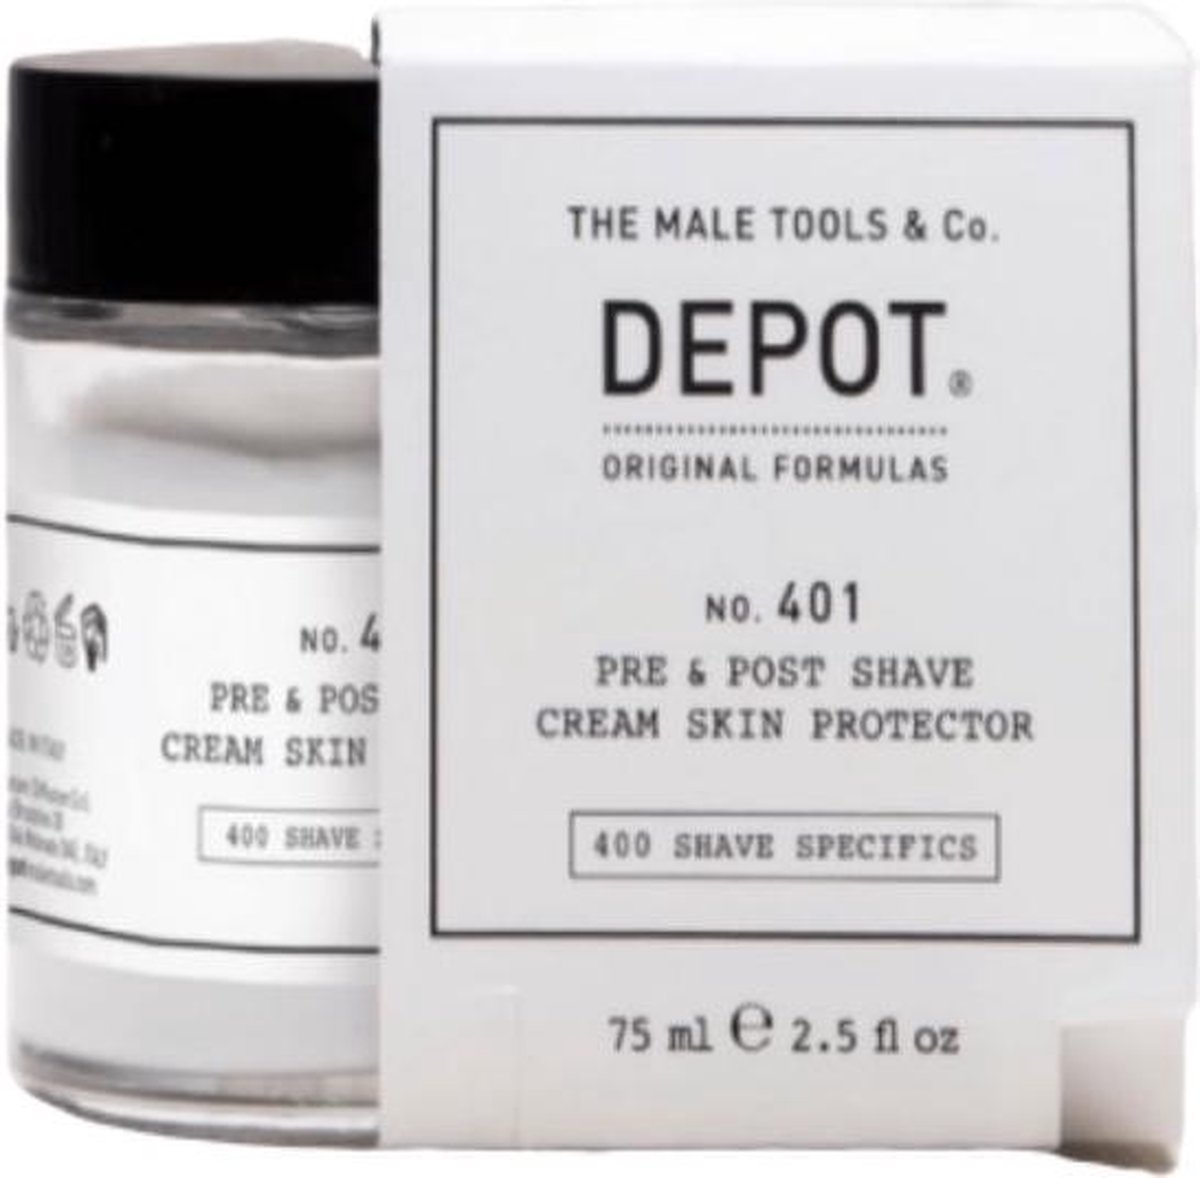 Depot - 401 Pre & Post Shave Cream Skin Protector - 75ml